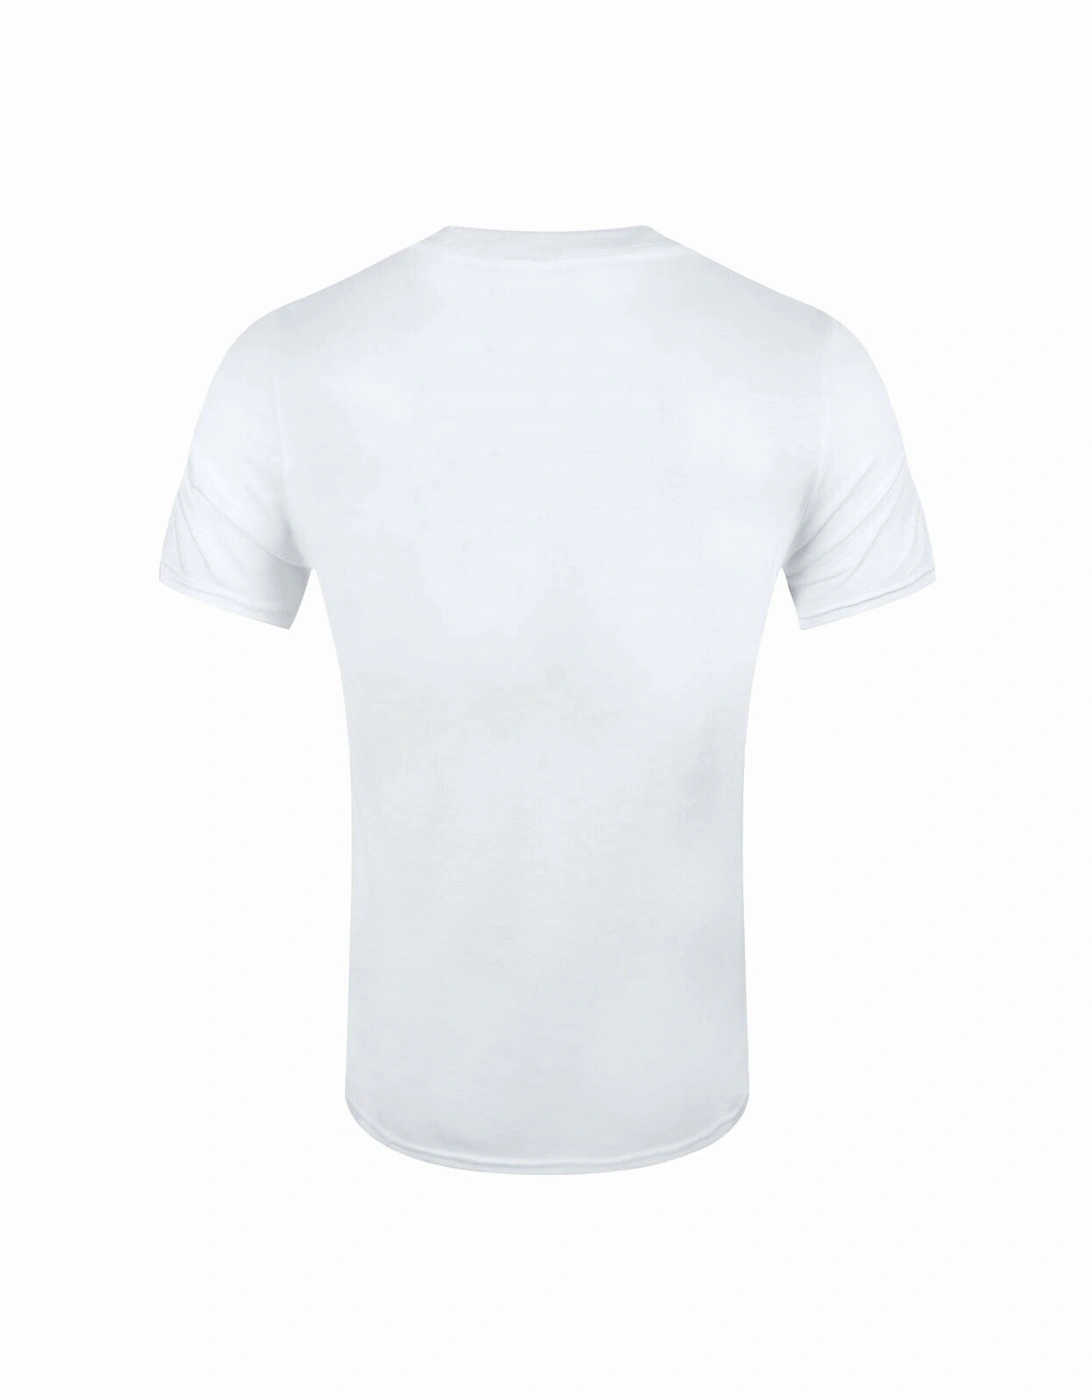 Unisex Adult Aladdin Sane Flash T-Shirt